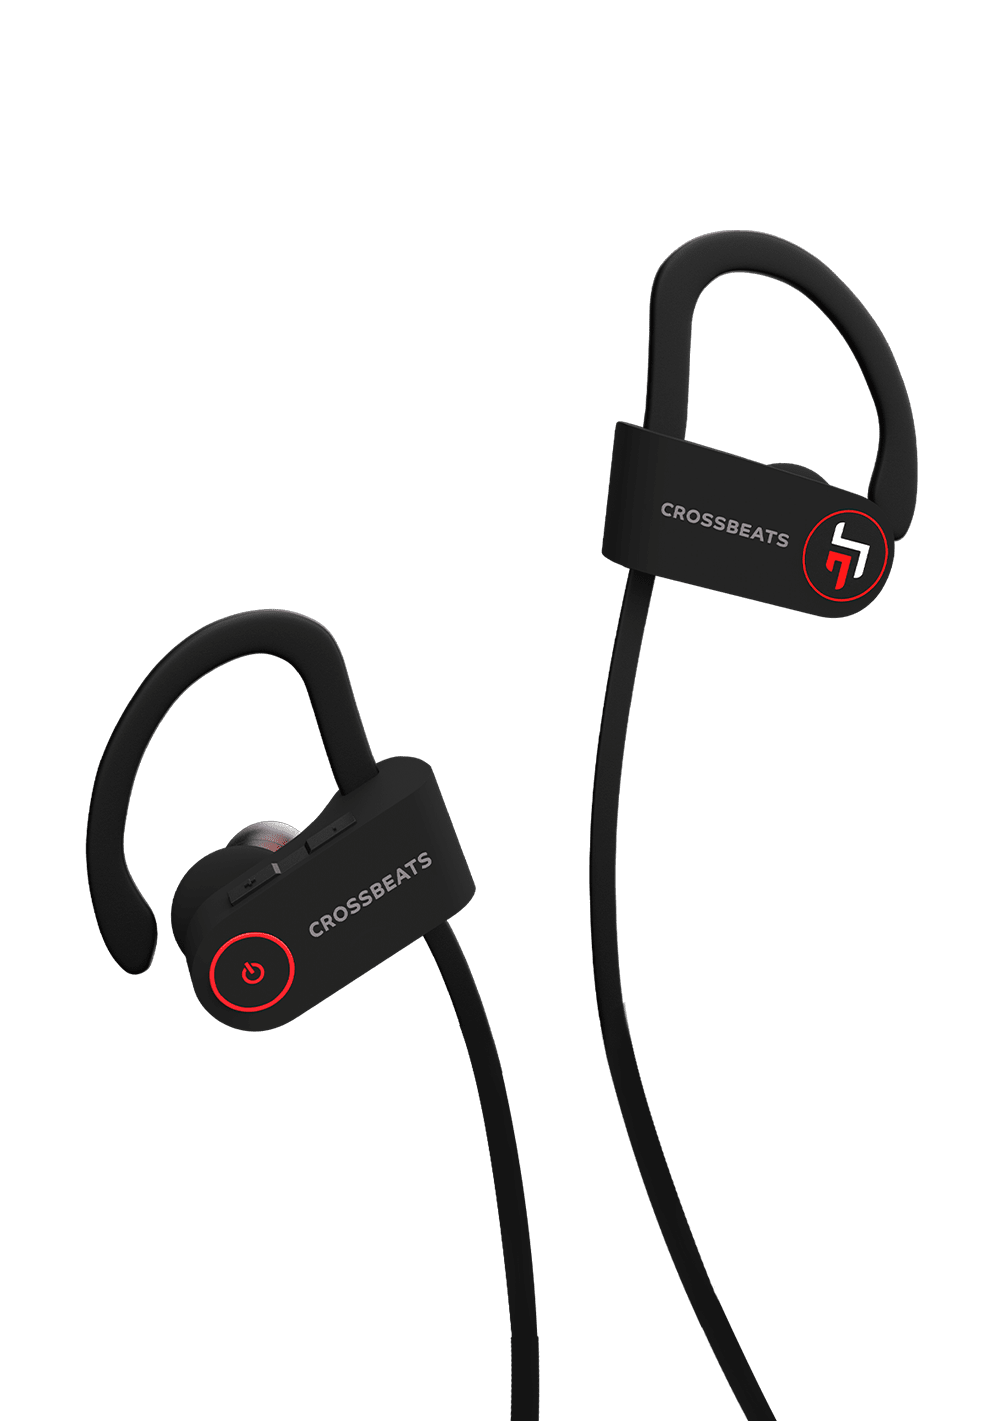 crossbeats raga wireless bluetooth earphones review